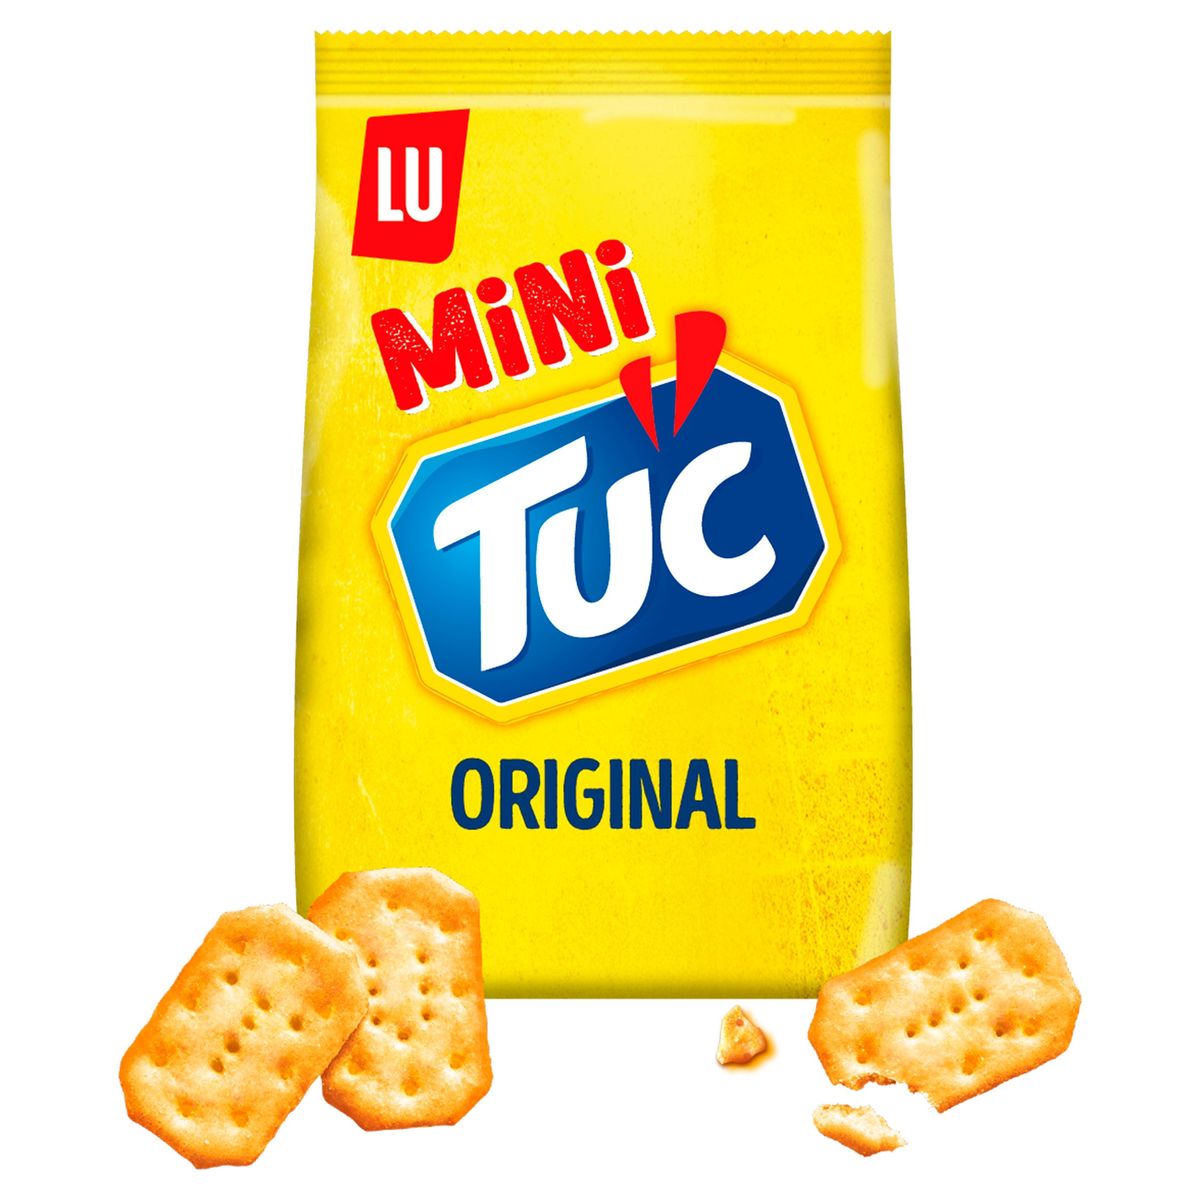 LU TUC Mini Crackers Original Zout 100 g